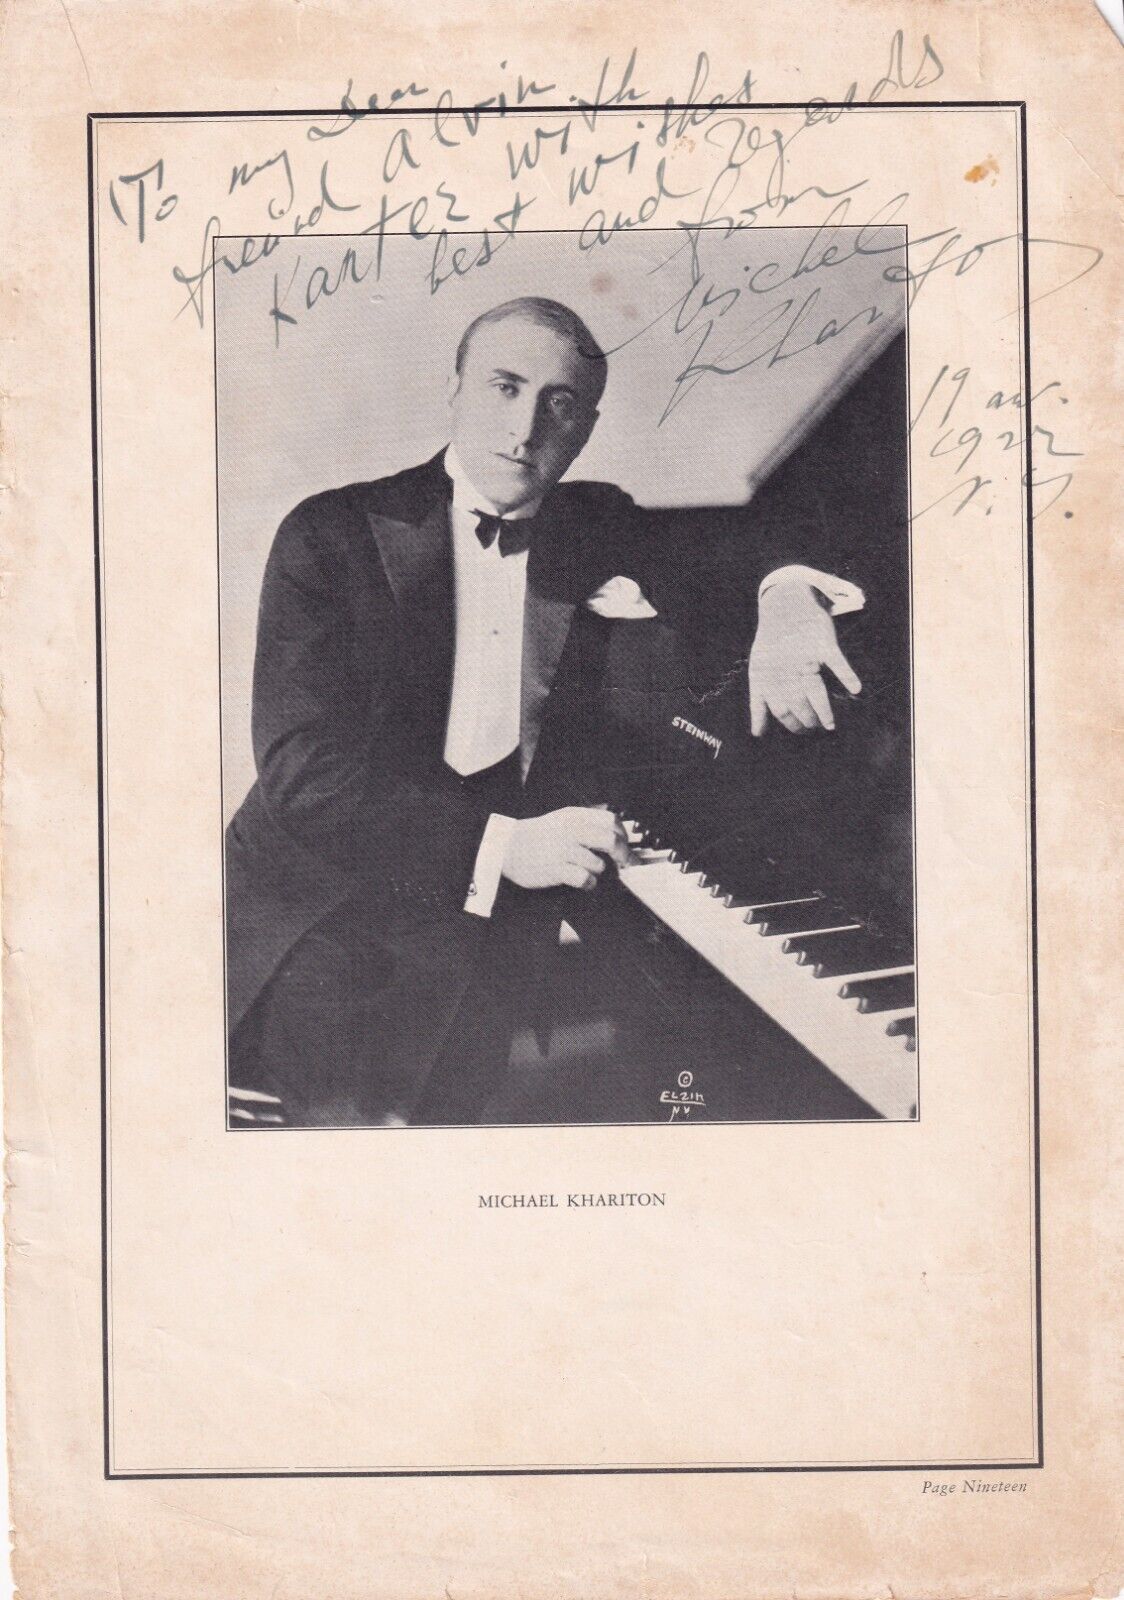 PHILADELPHIA PA. 1927 MICHAEL KHARITON PIANIST AUTOGRAPHED PIANO RECITAL PROGRAM